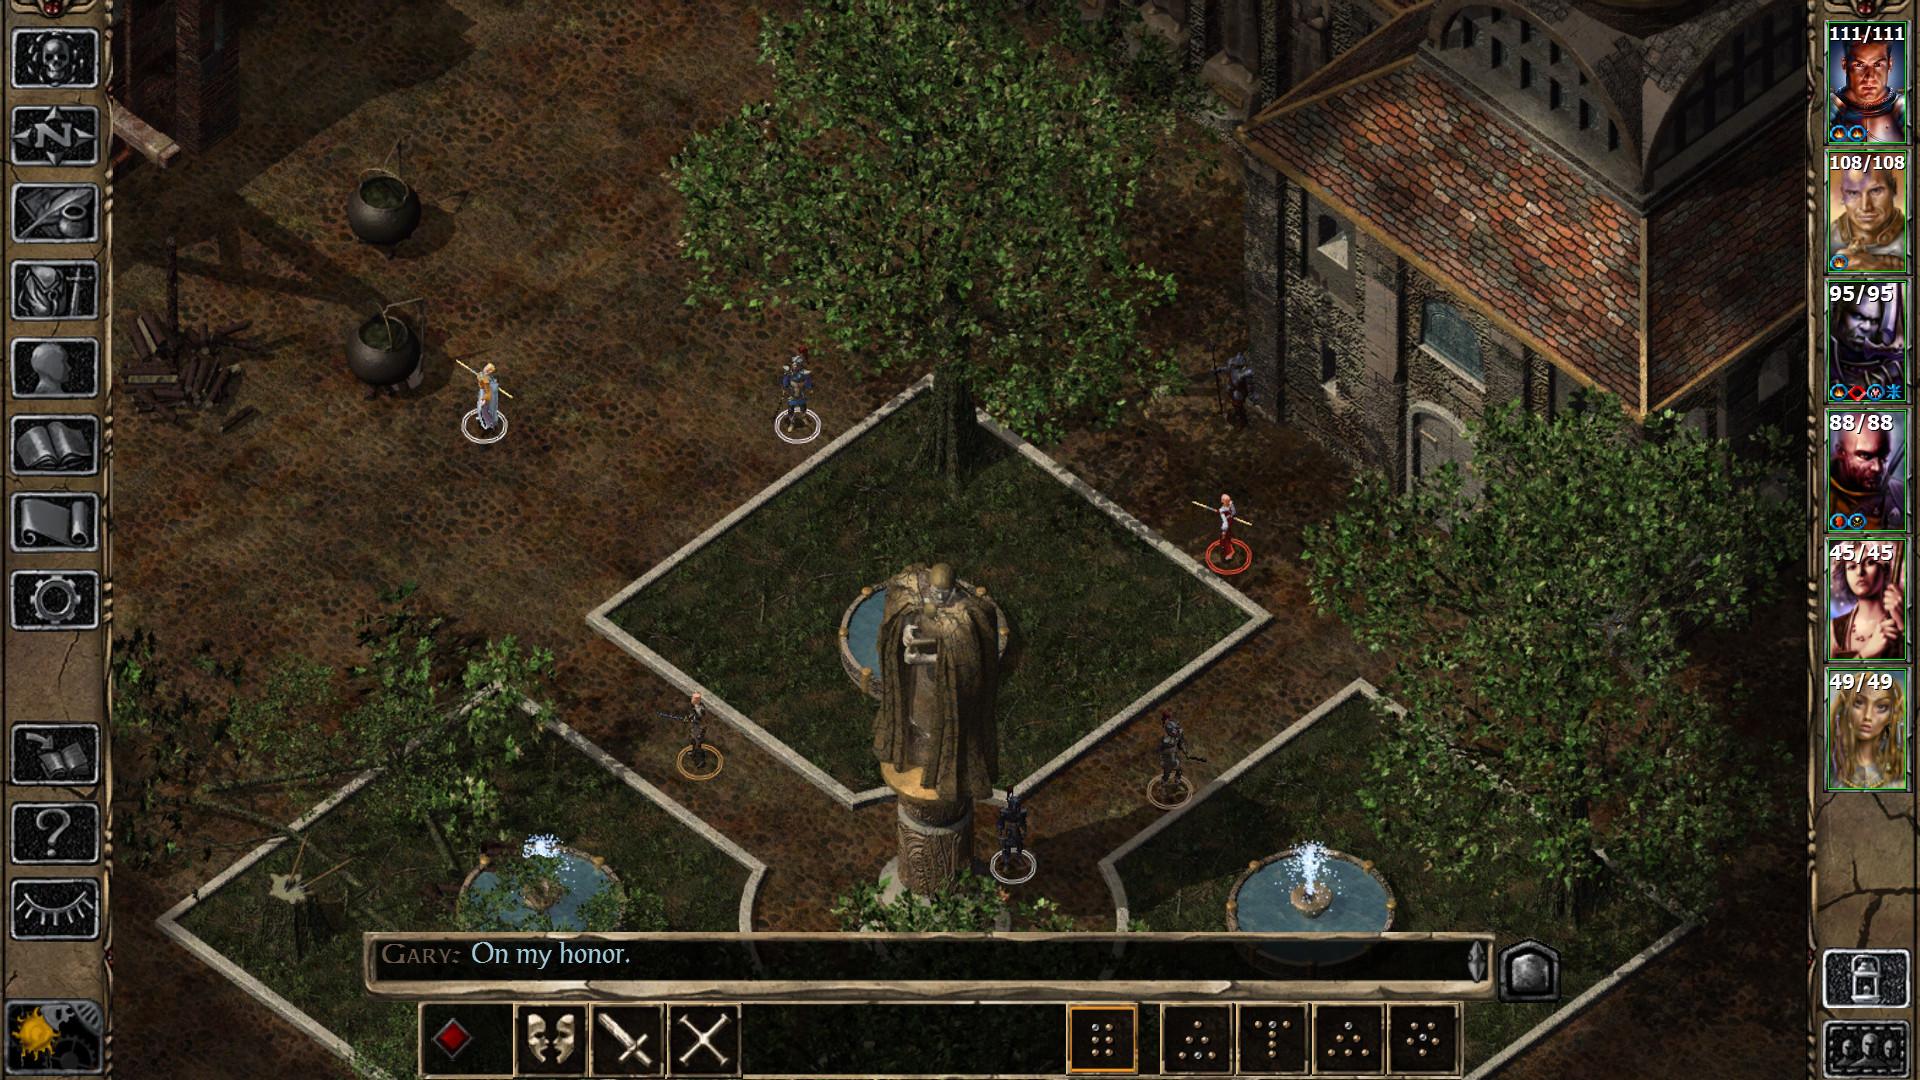 Screenshot №7 from game Baldur's Gate II: Enhanced Edition